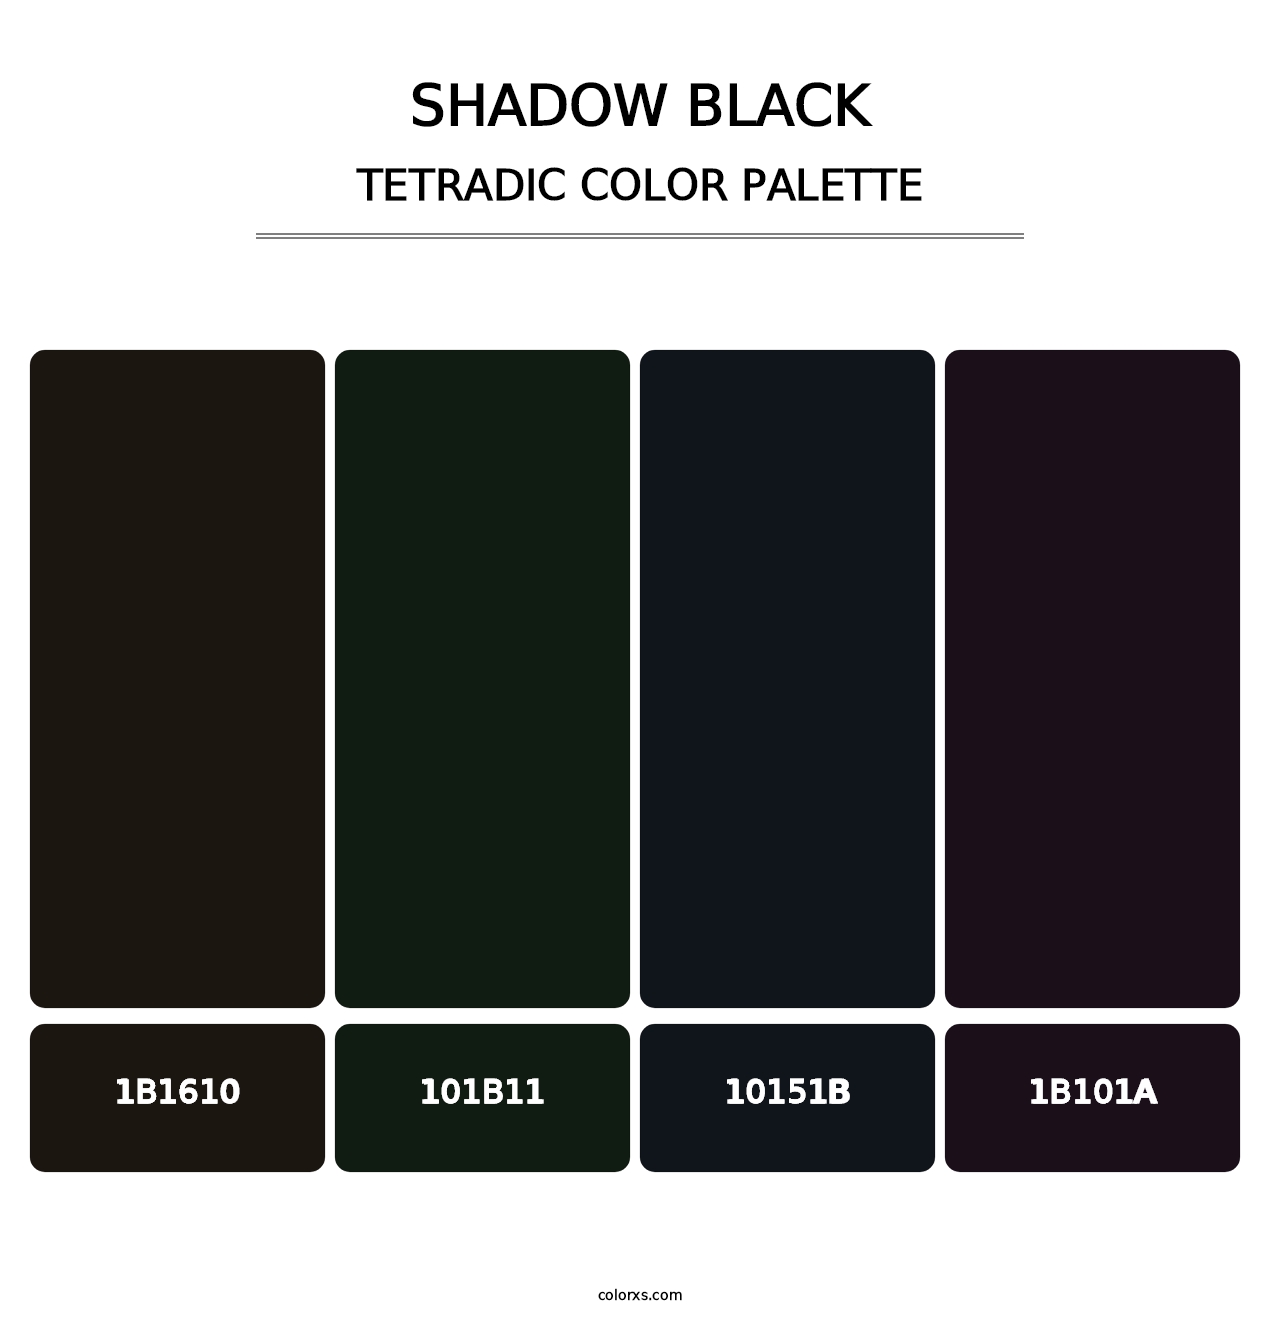 Shadow Black - Tetradic Color Palette